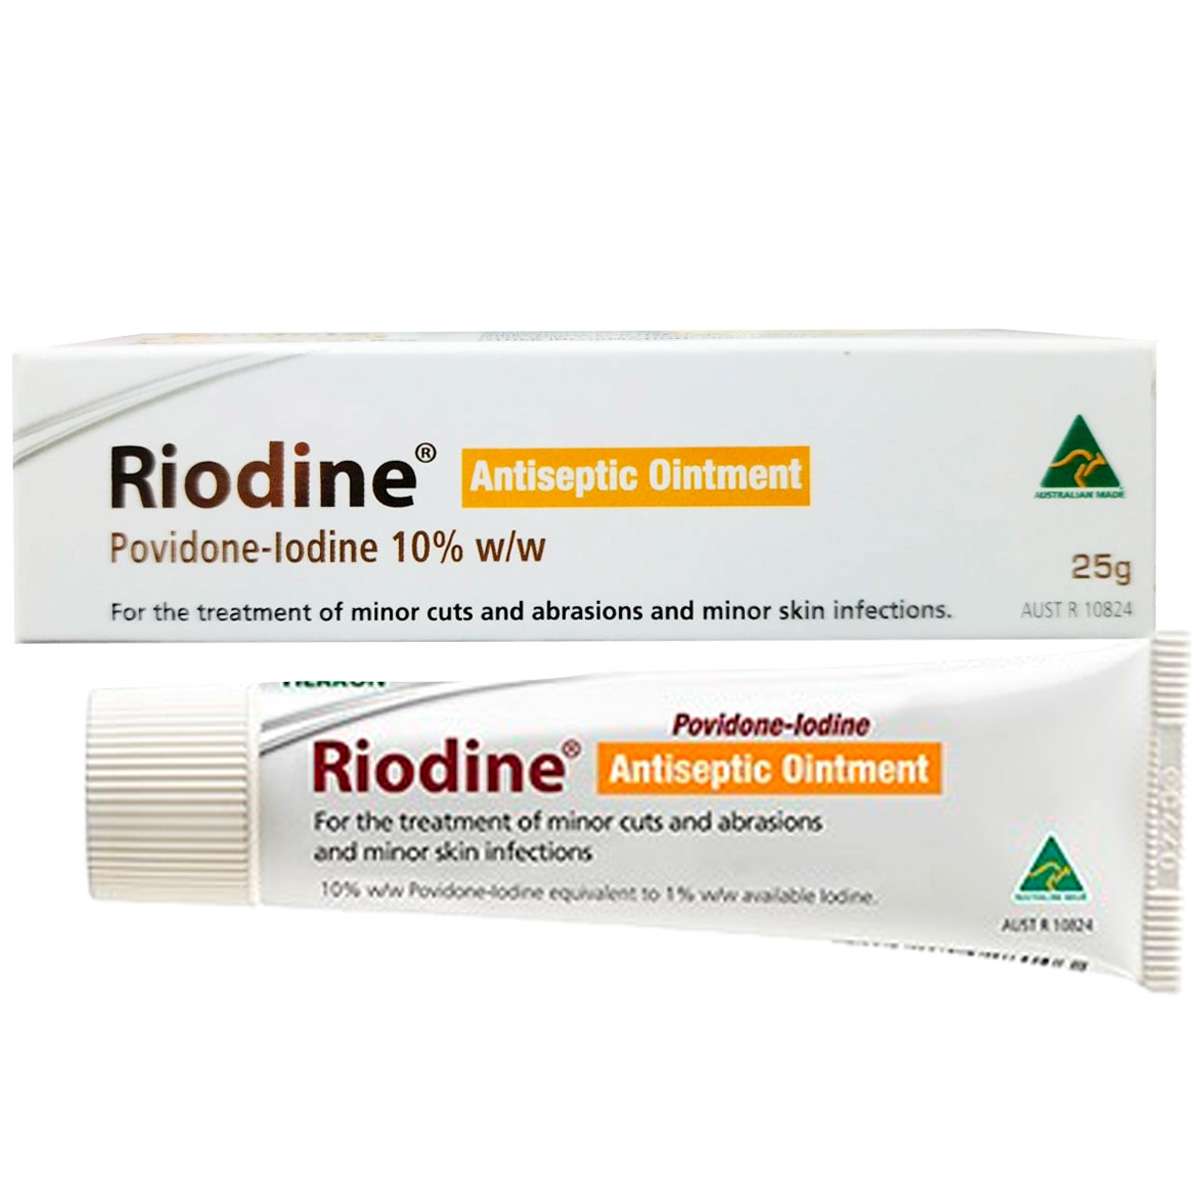 RIODINE 10% Povidone-Iodine Ointment 25g Tube